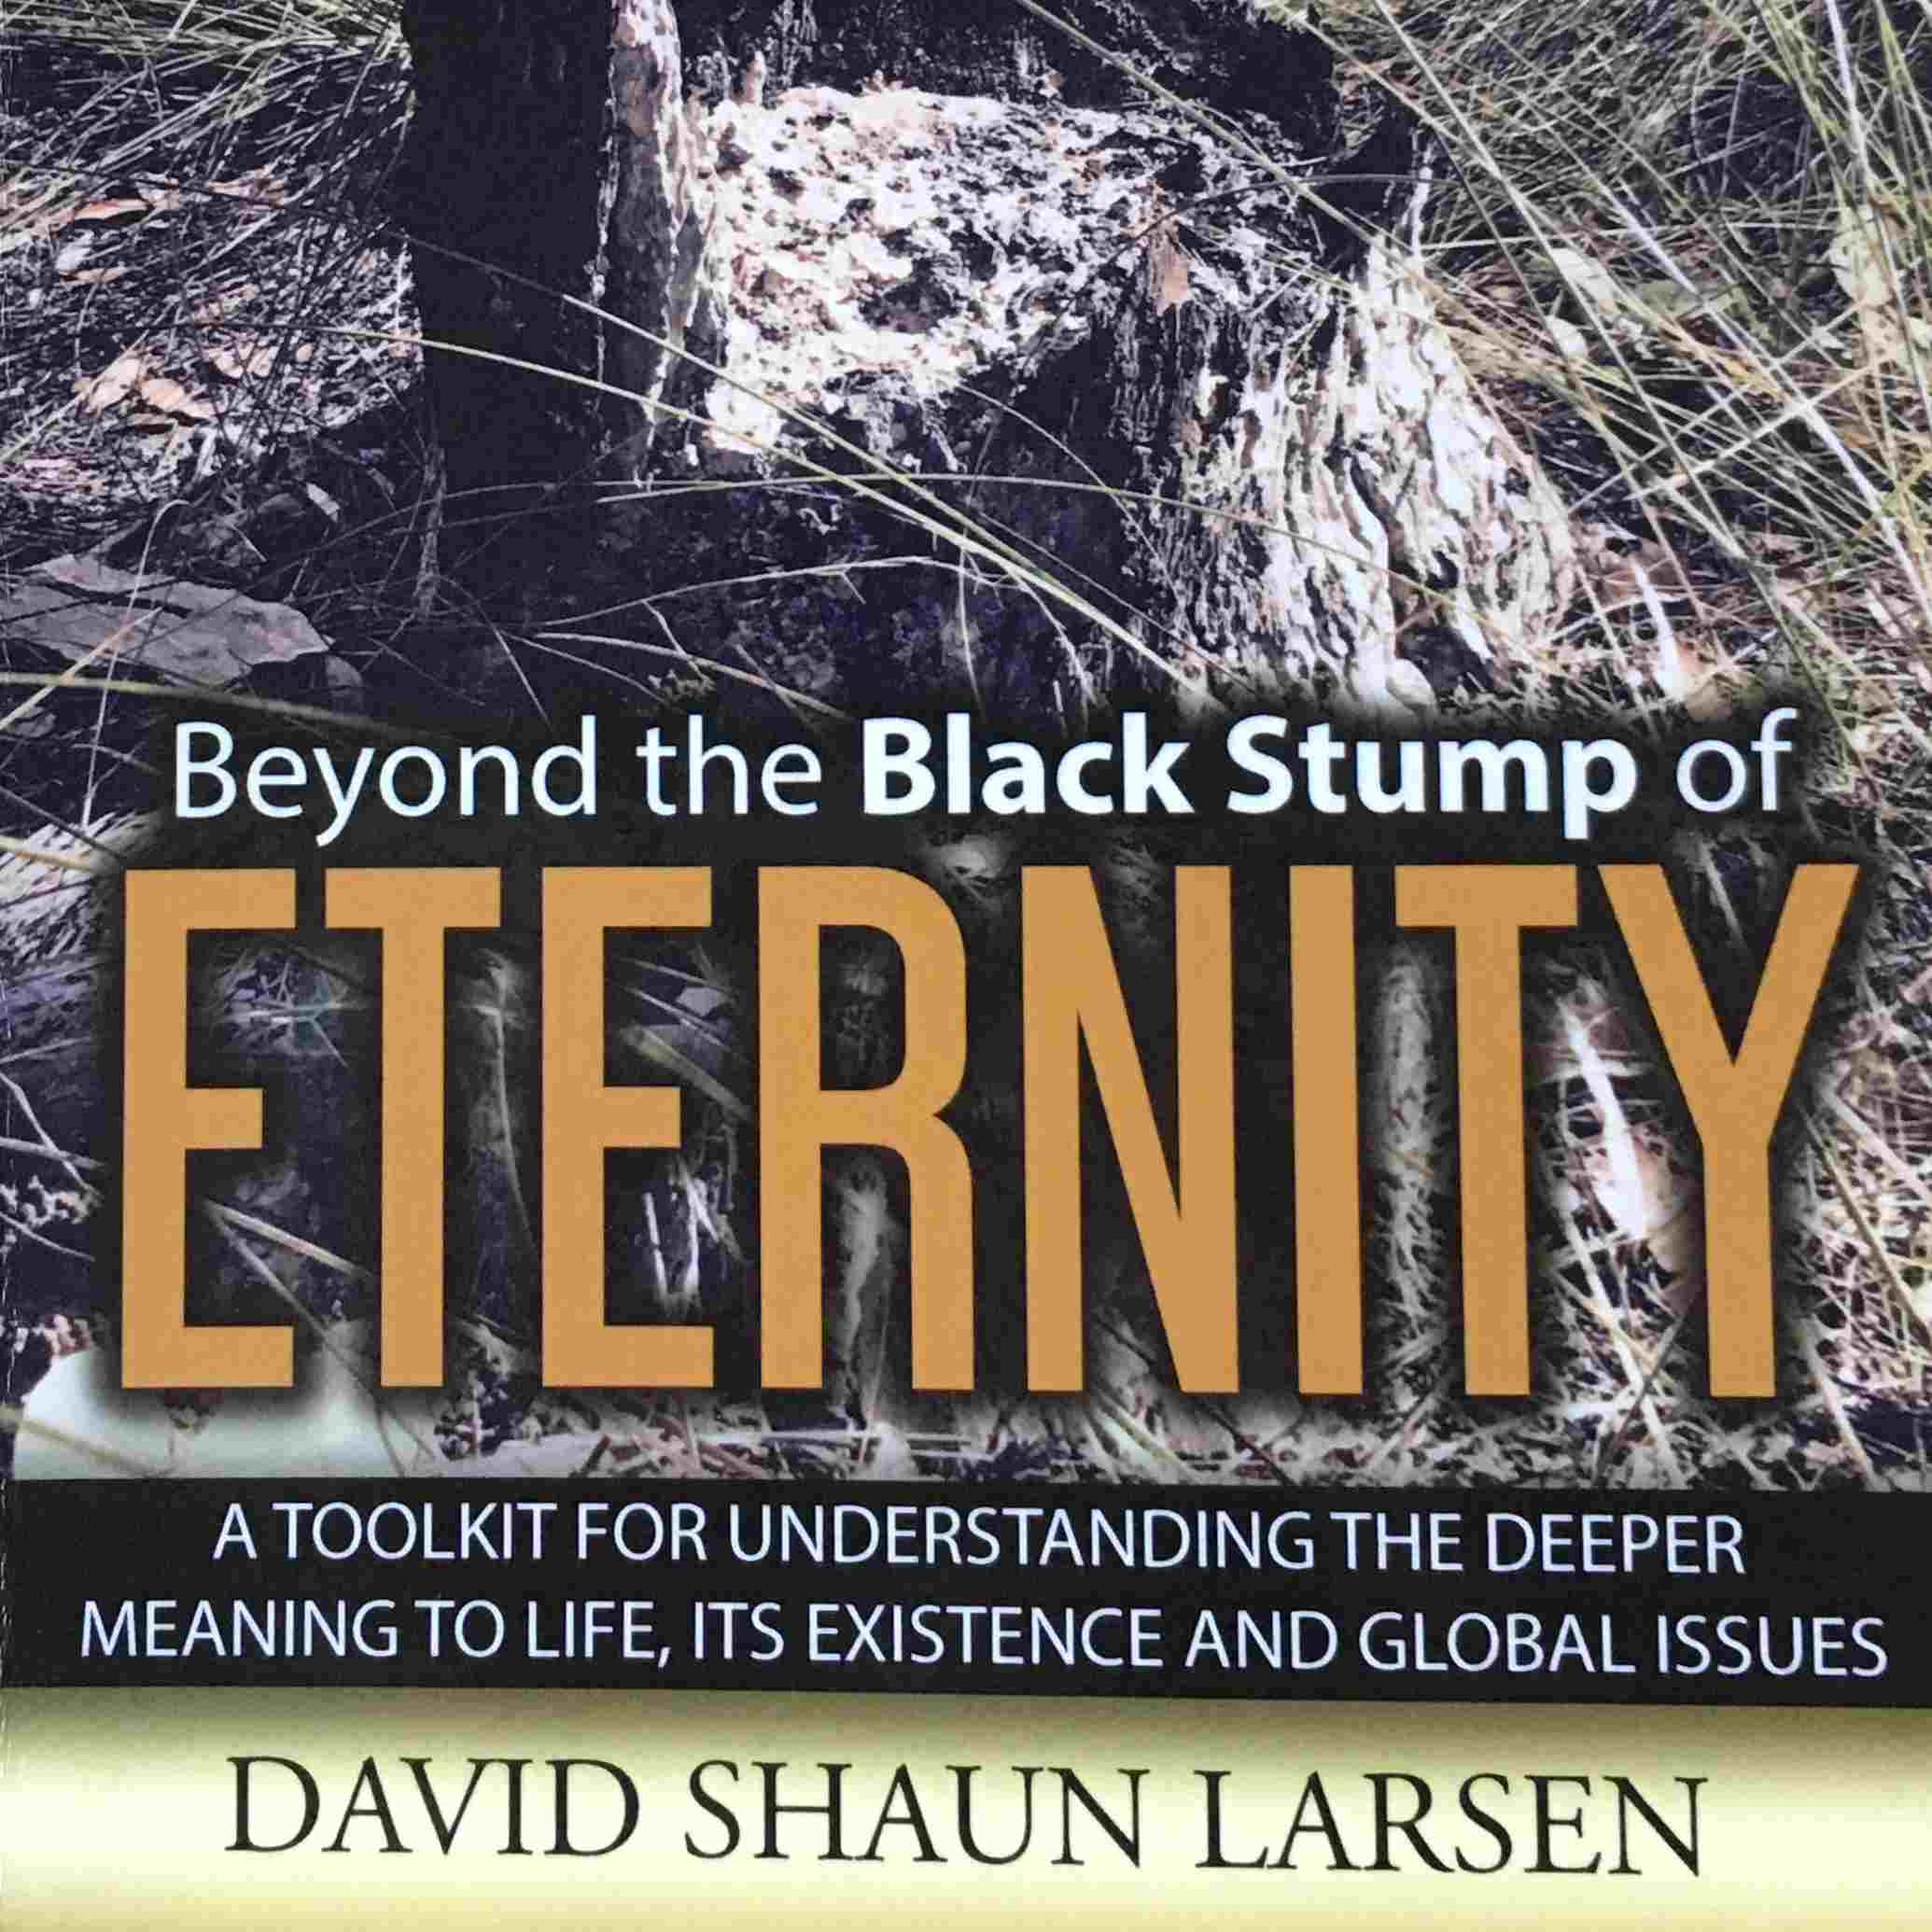 Book cover: 'Beyond the Black Stump of Eternity' by David Shaun Larsen